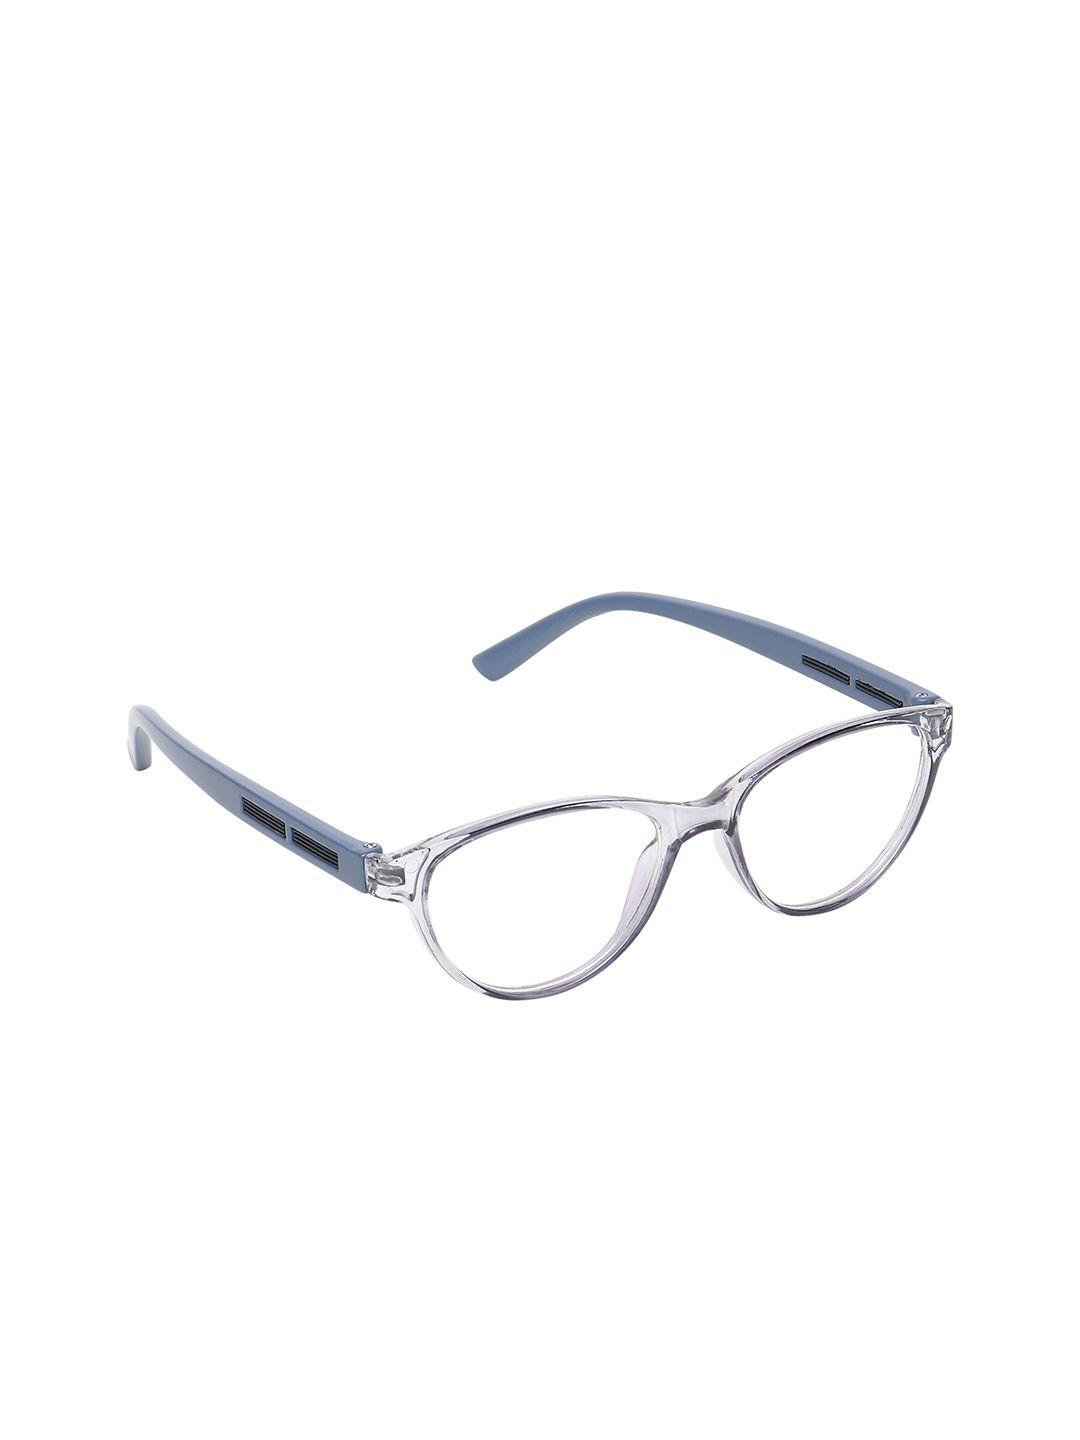 scaglia unisex cateye sunglasses with uv protected lens-aero cat lgrey_scg-grey